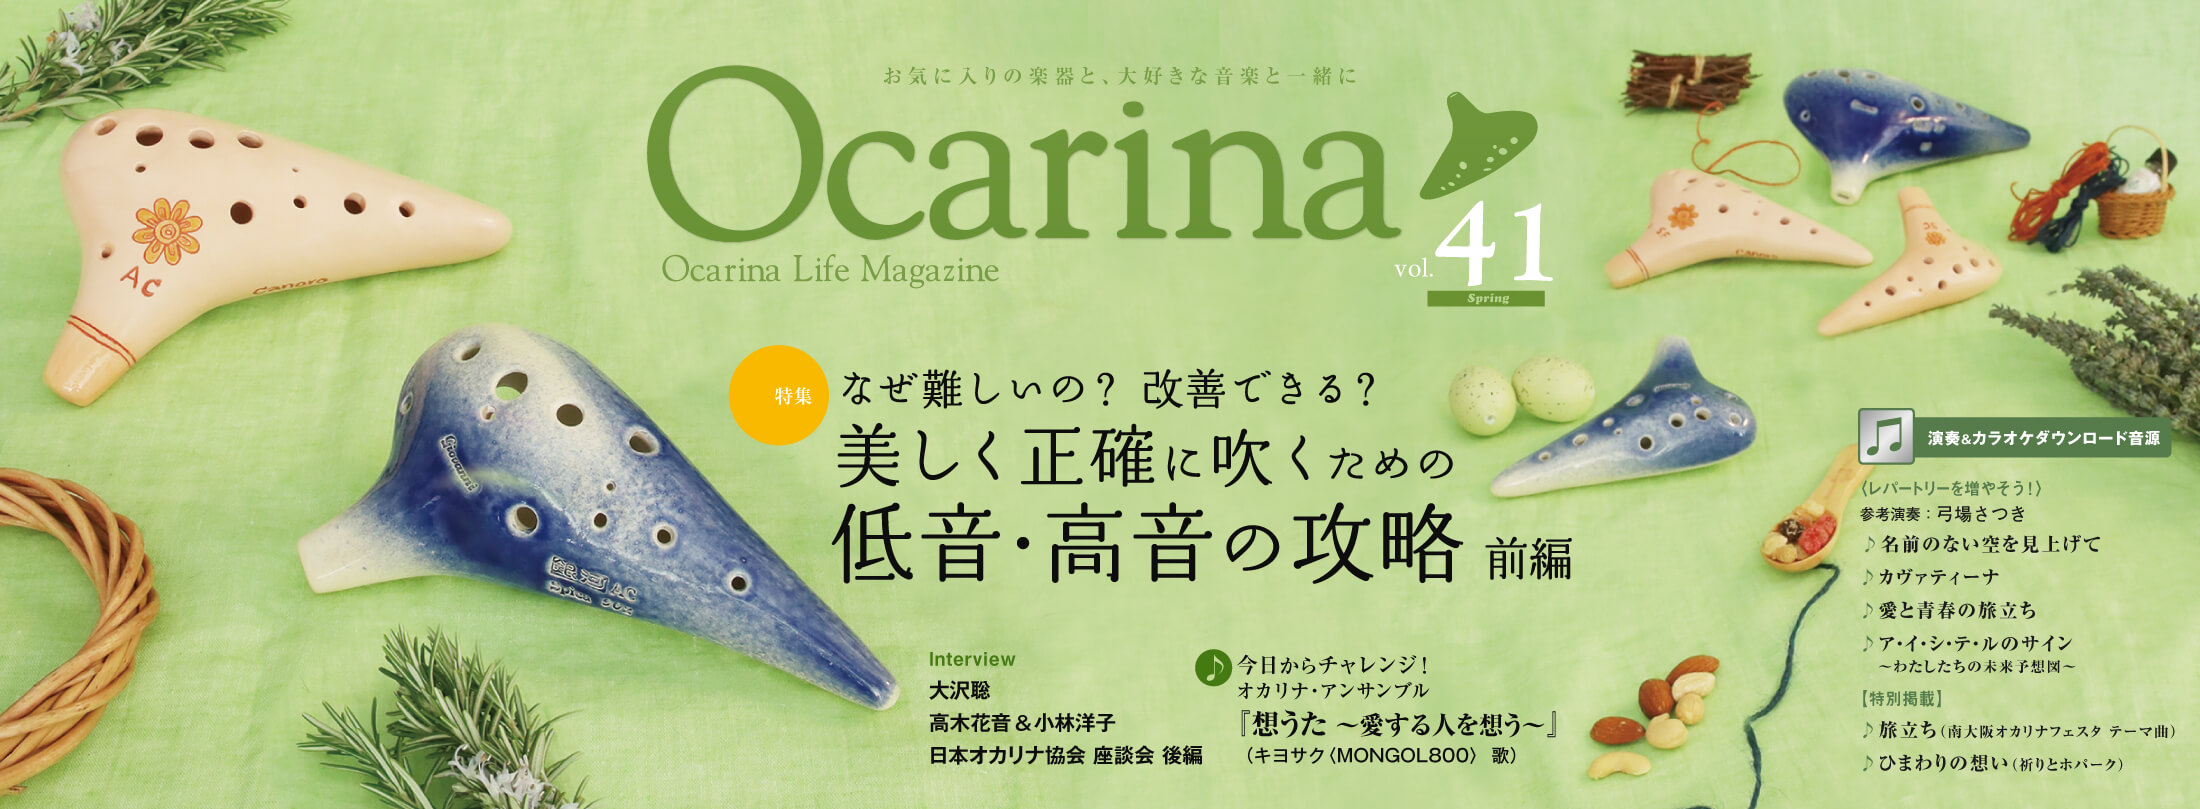 Ocarina 41号